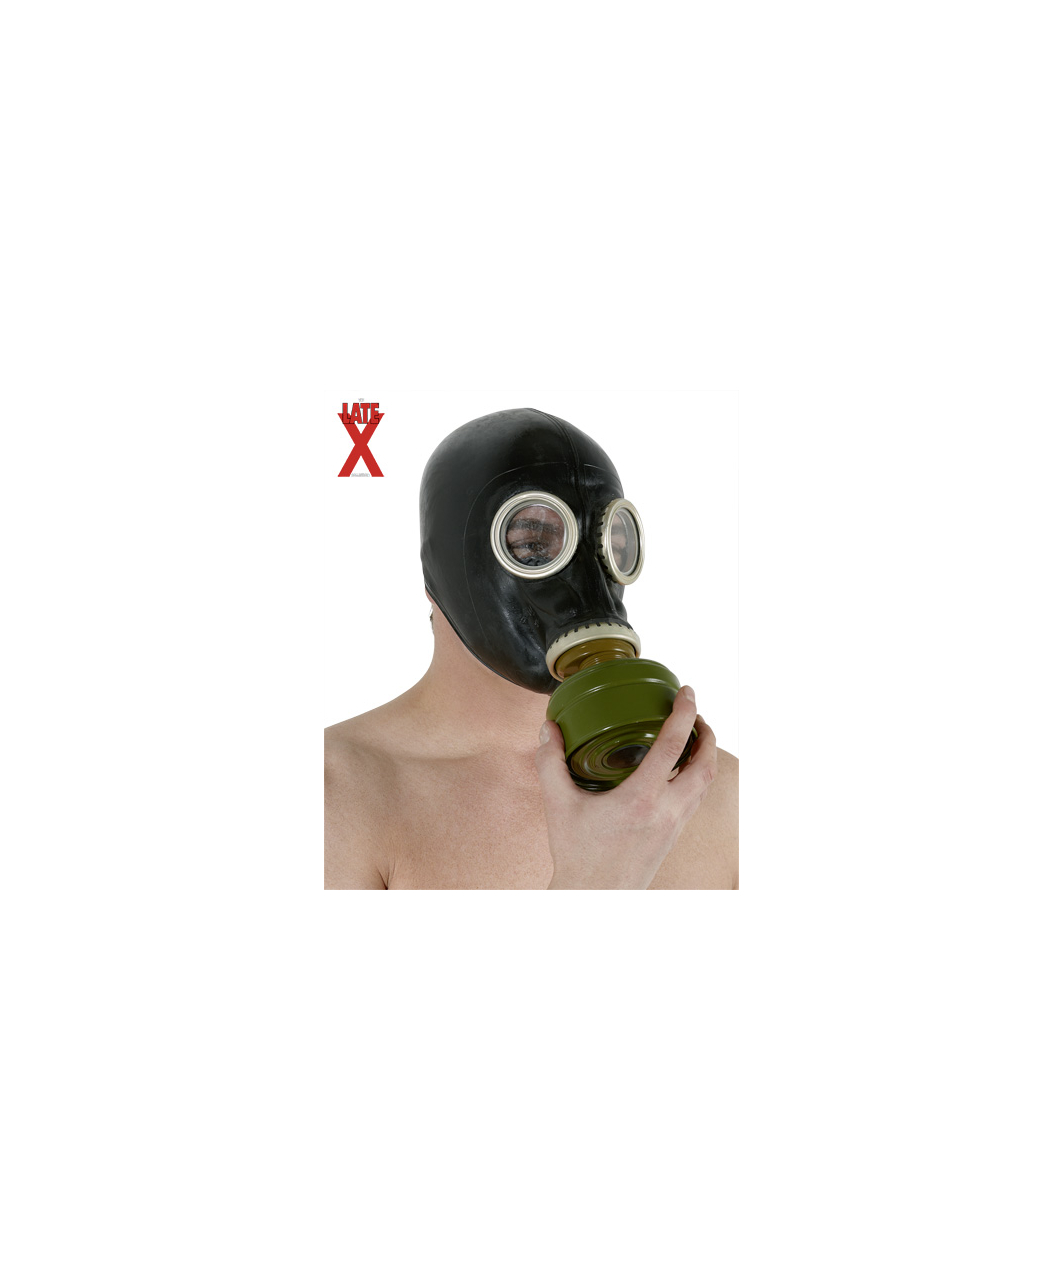 Late X Latex Gas Mask